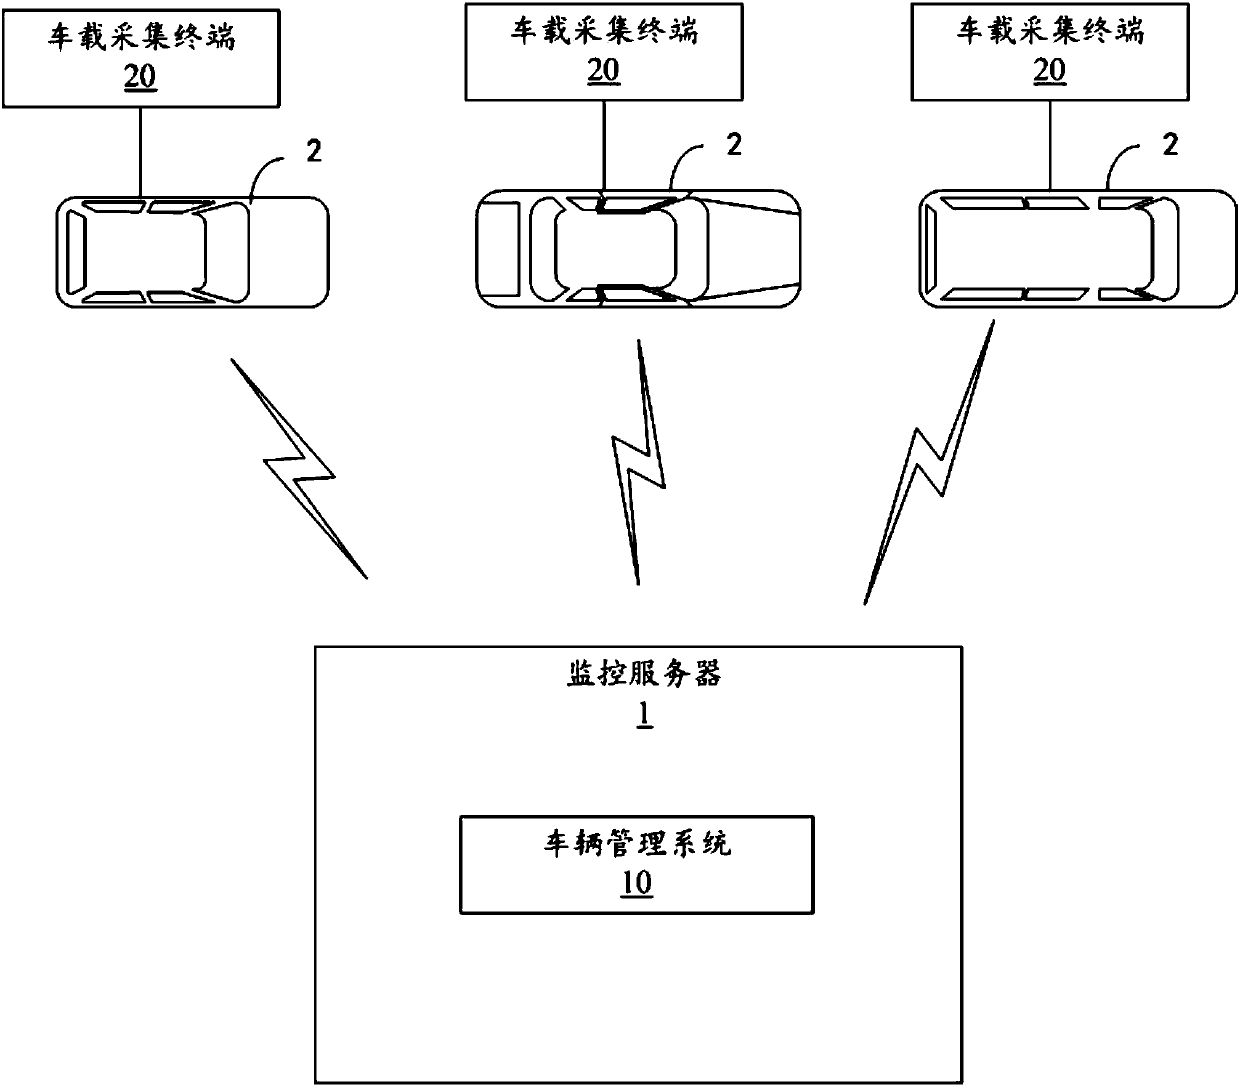 Vehicle management method and server